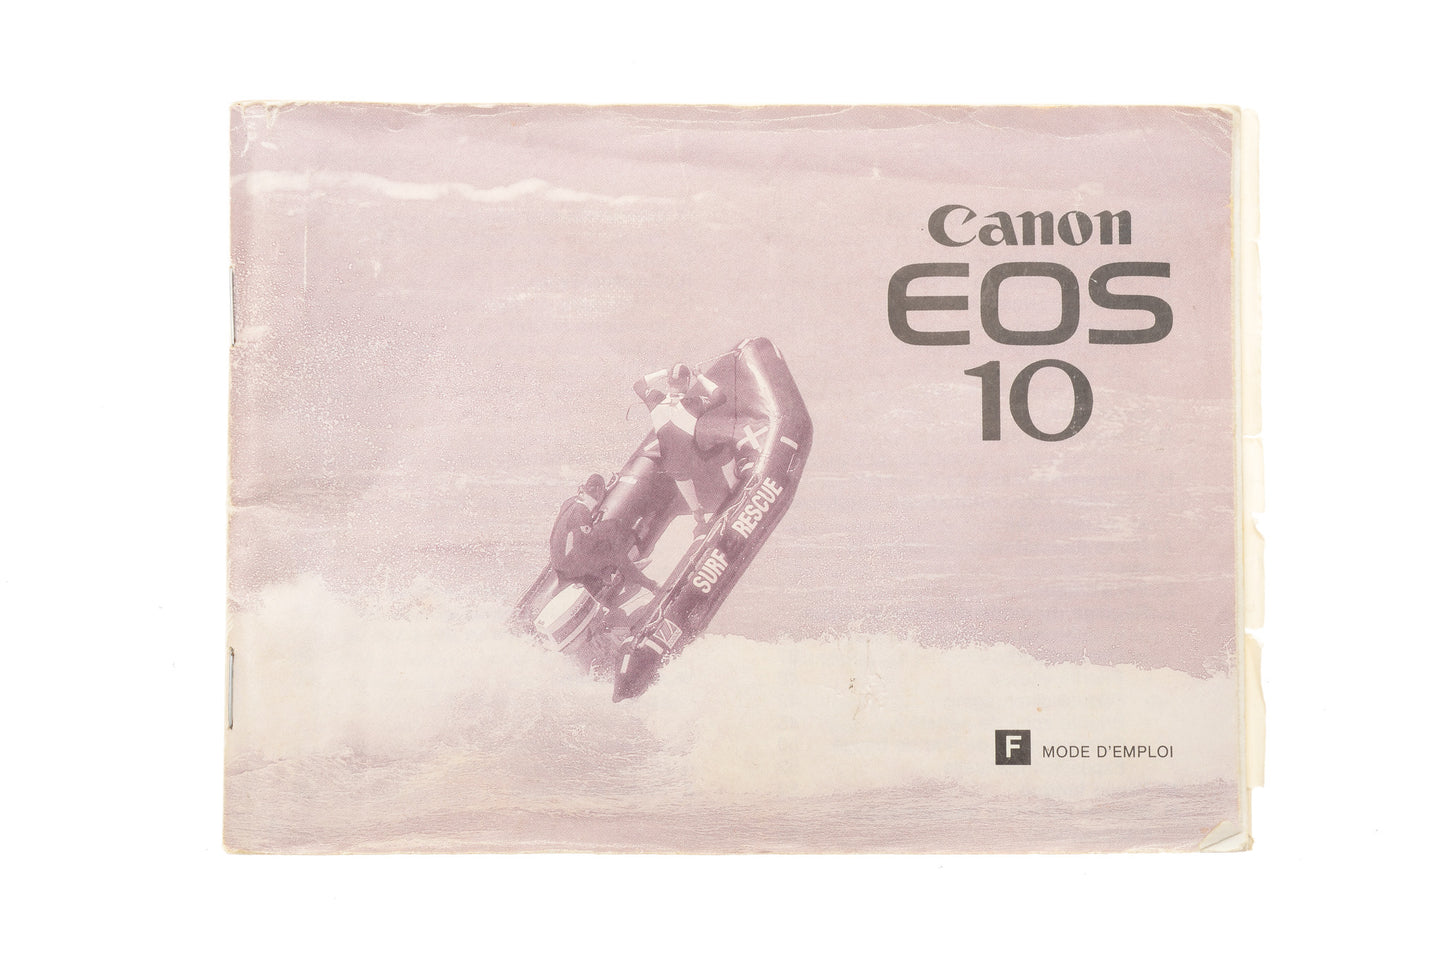 Canon EOS 10 Instructions